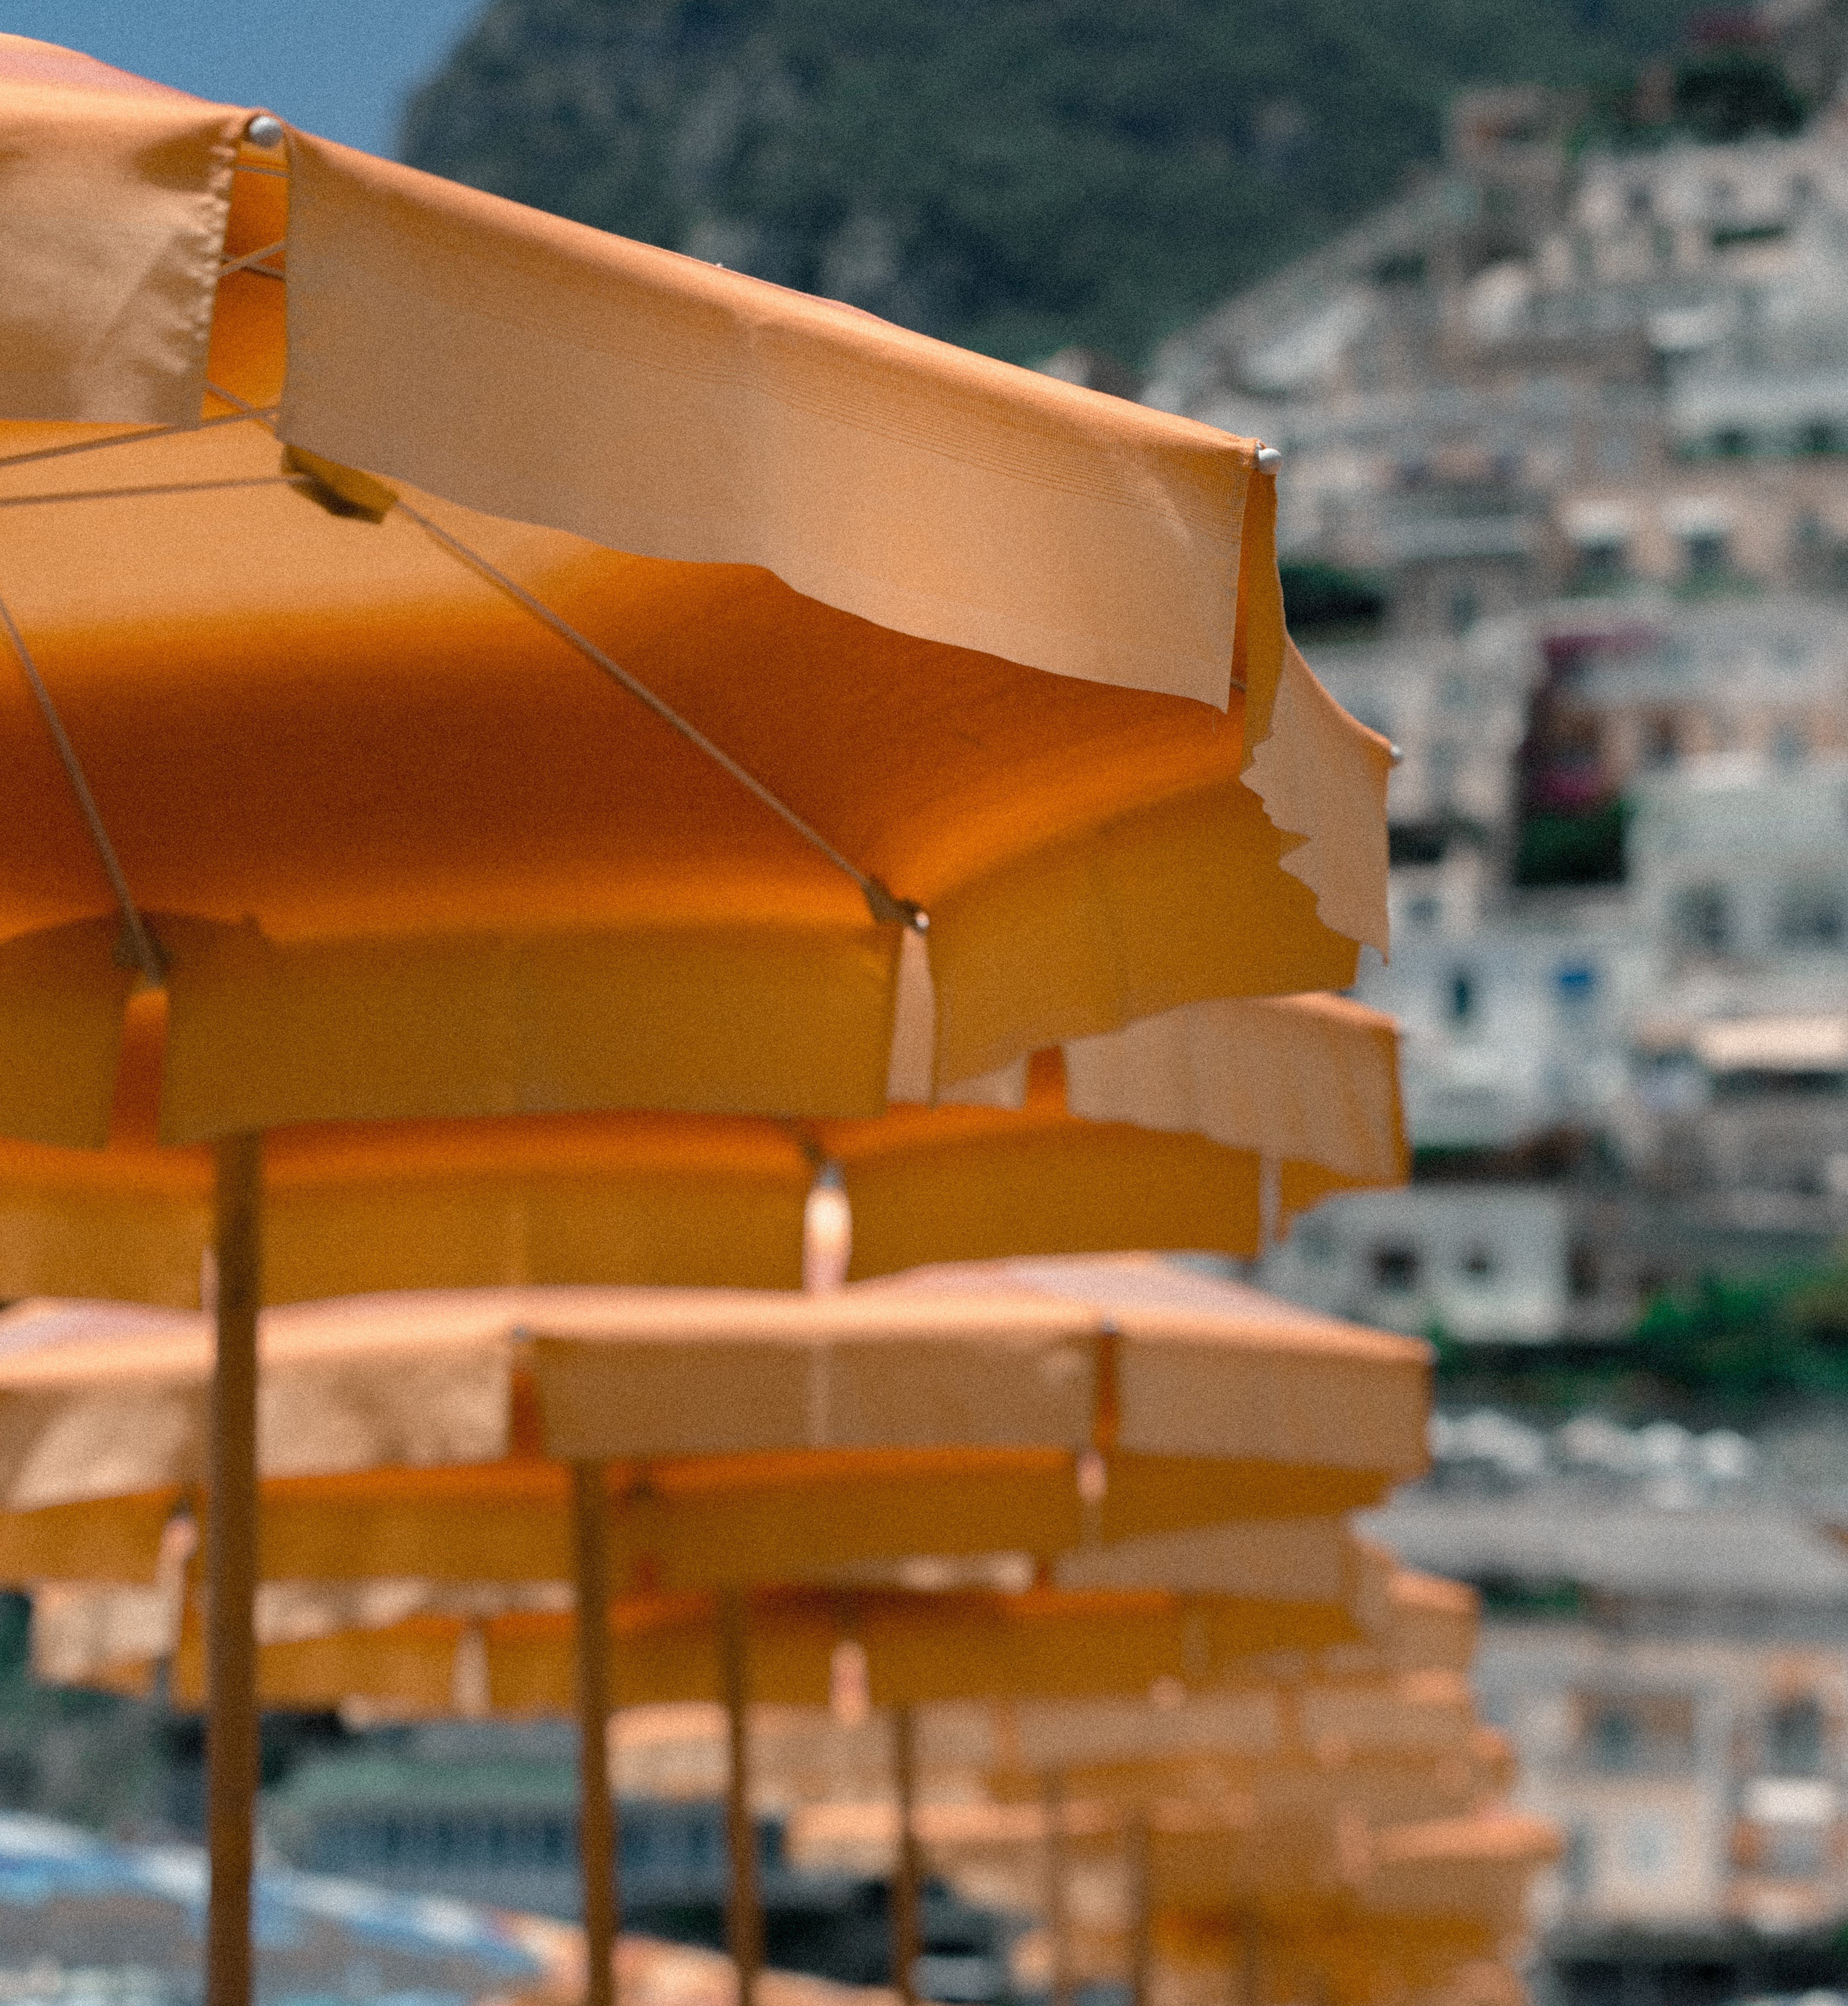 Umbrellas with matching orange canopies